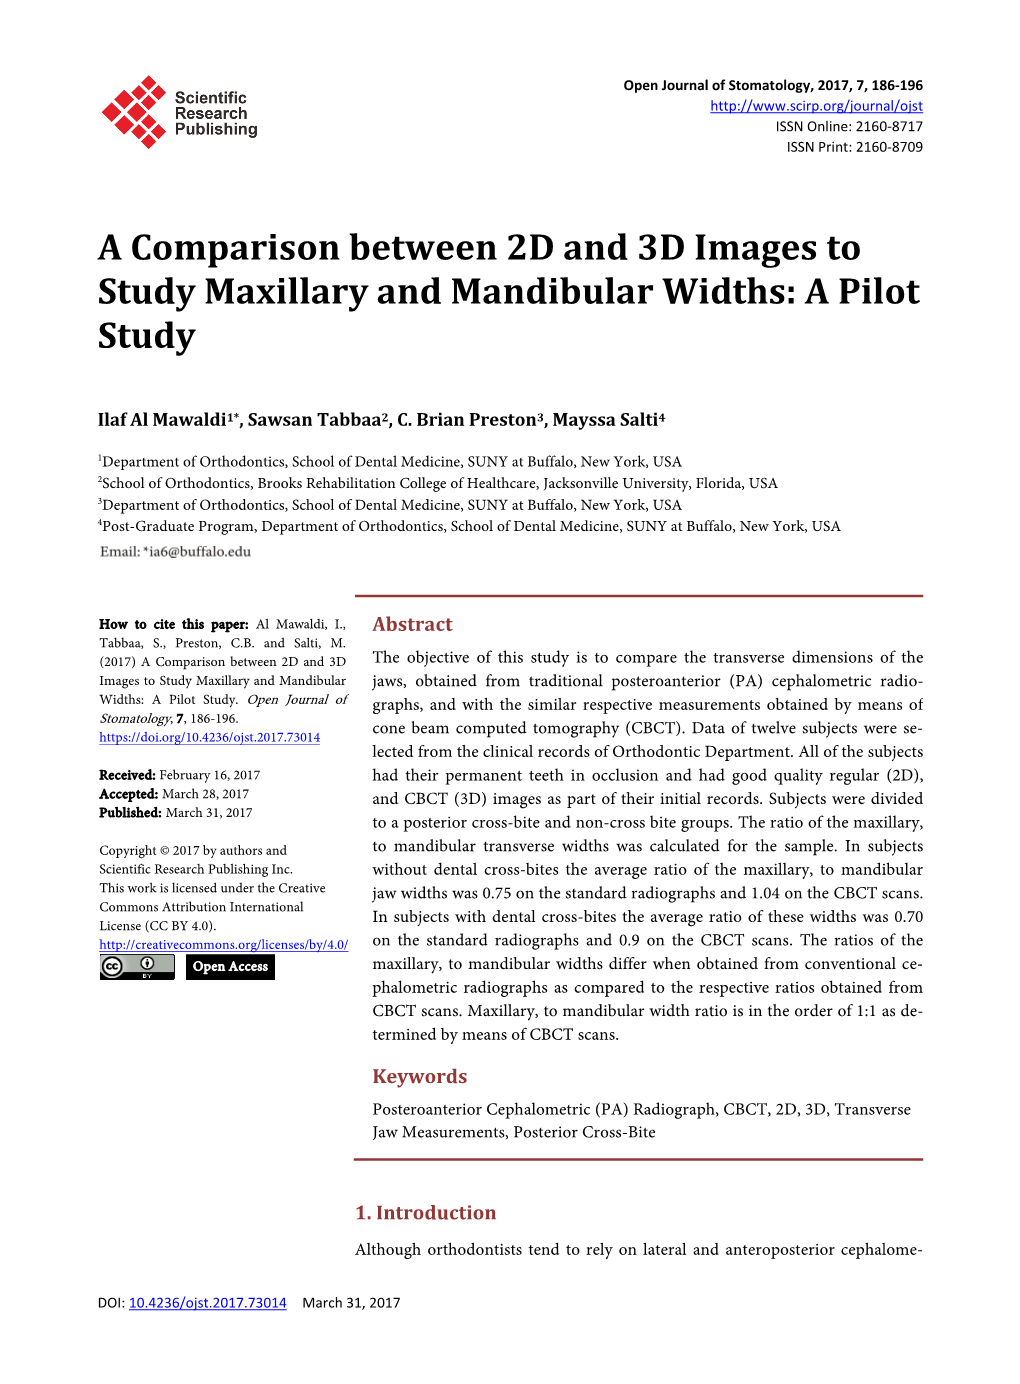 A Comparison Between 2D and 3D Images to Study Maxillary and Mandibular Widths: a Pilot Study